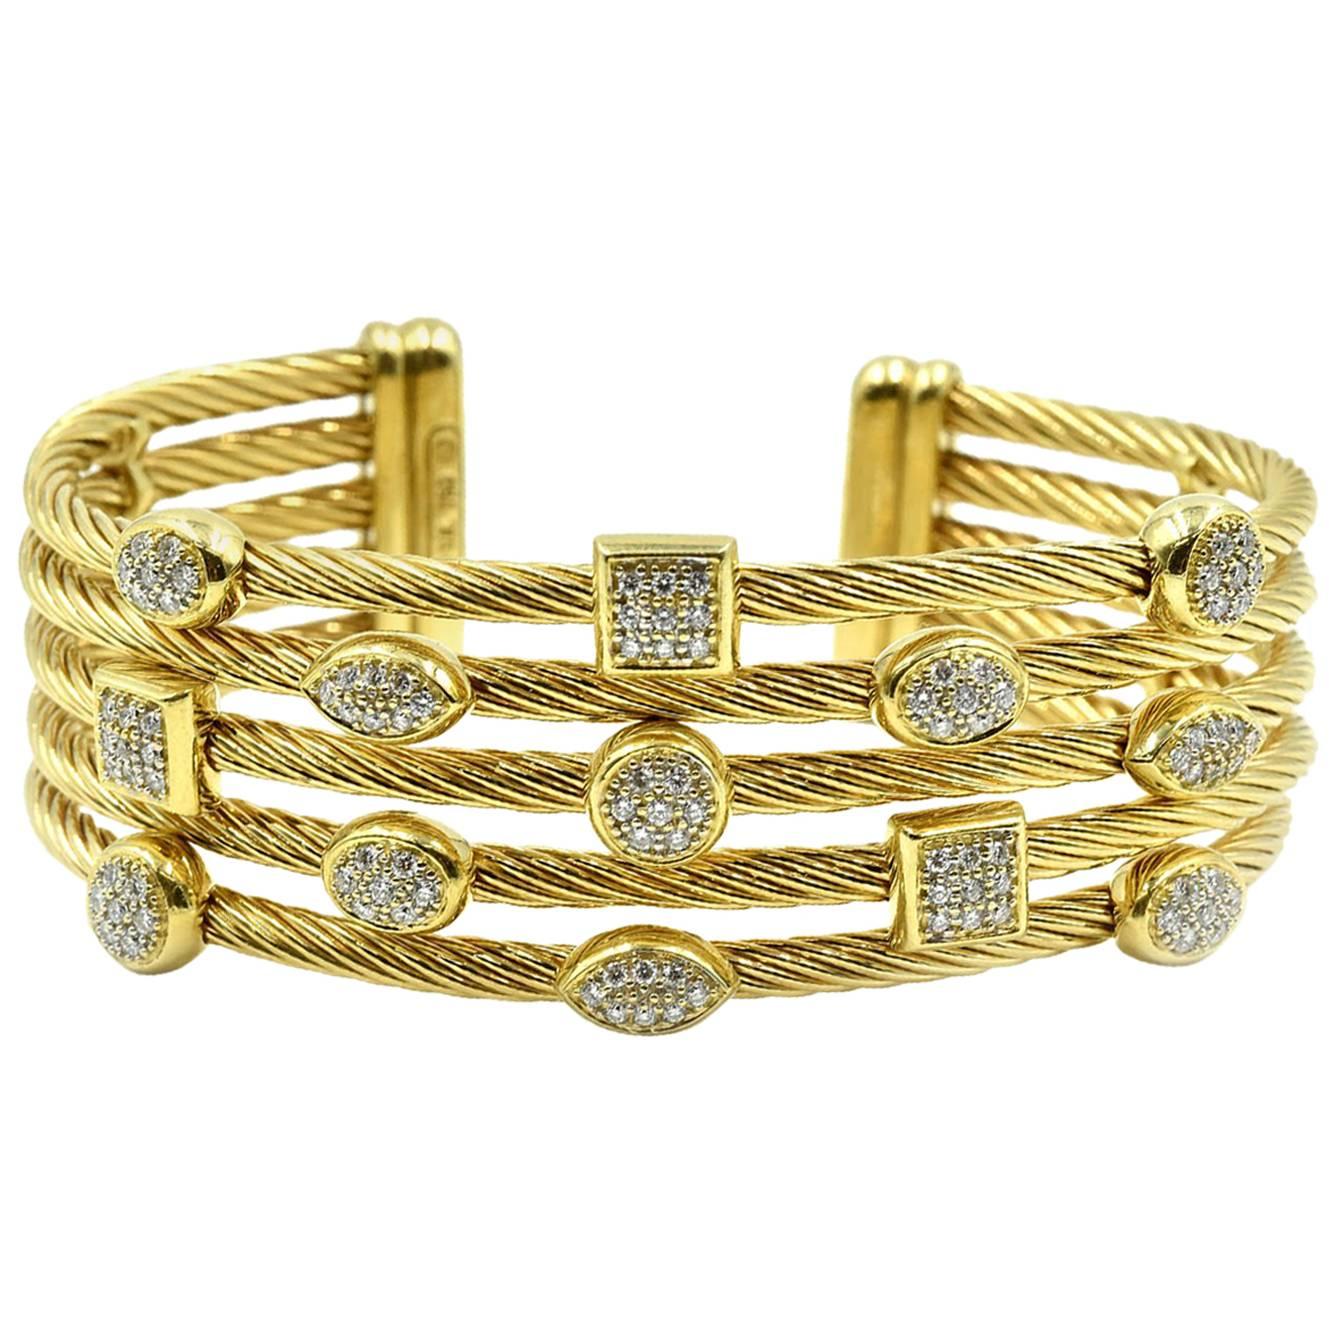 David Yurman Confetti Wide Cuff Bracelet with Pave Set Diamonds